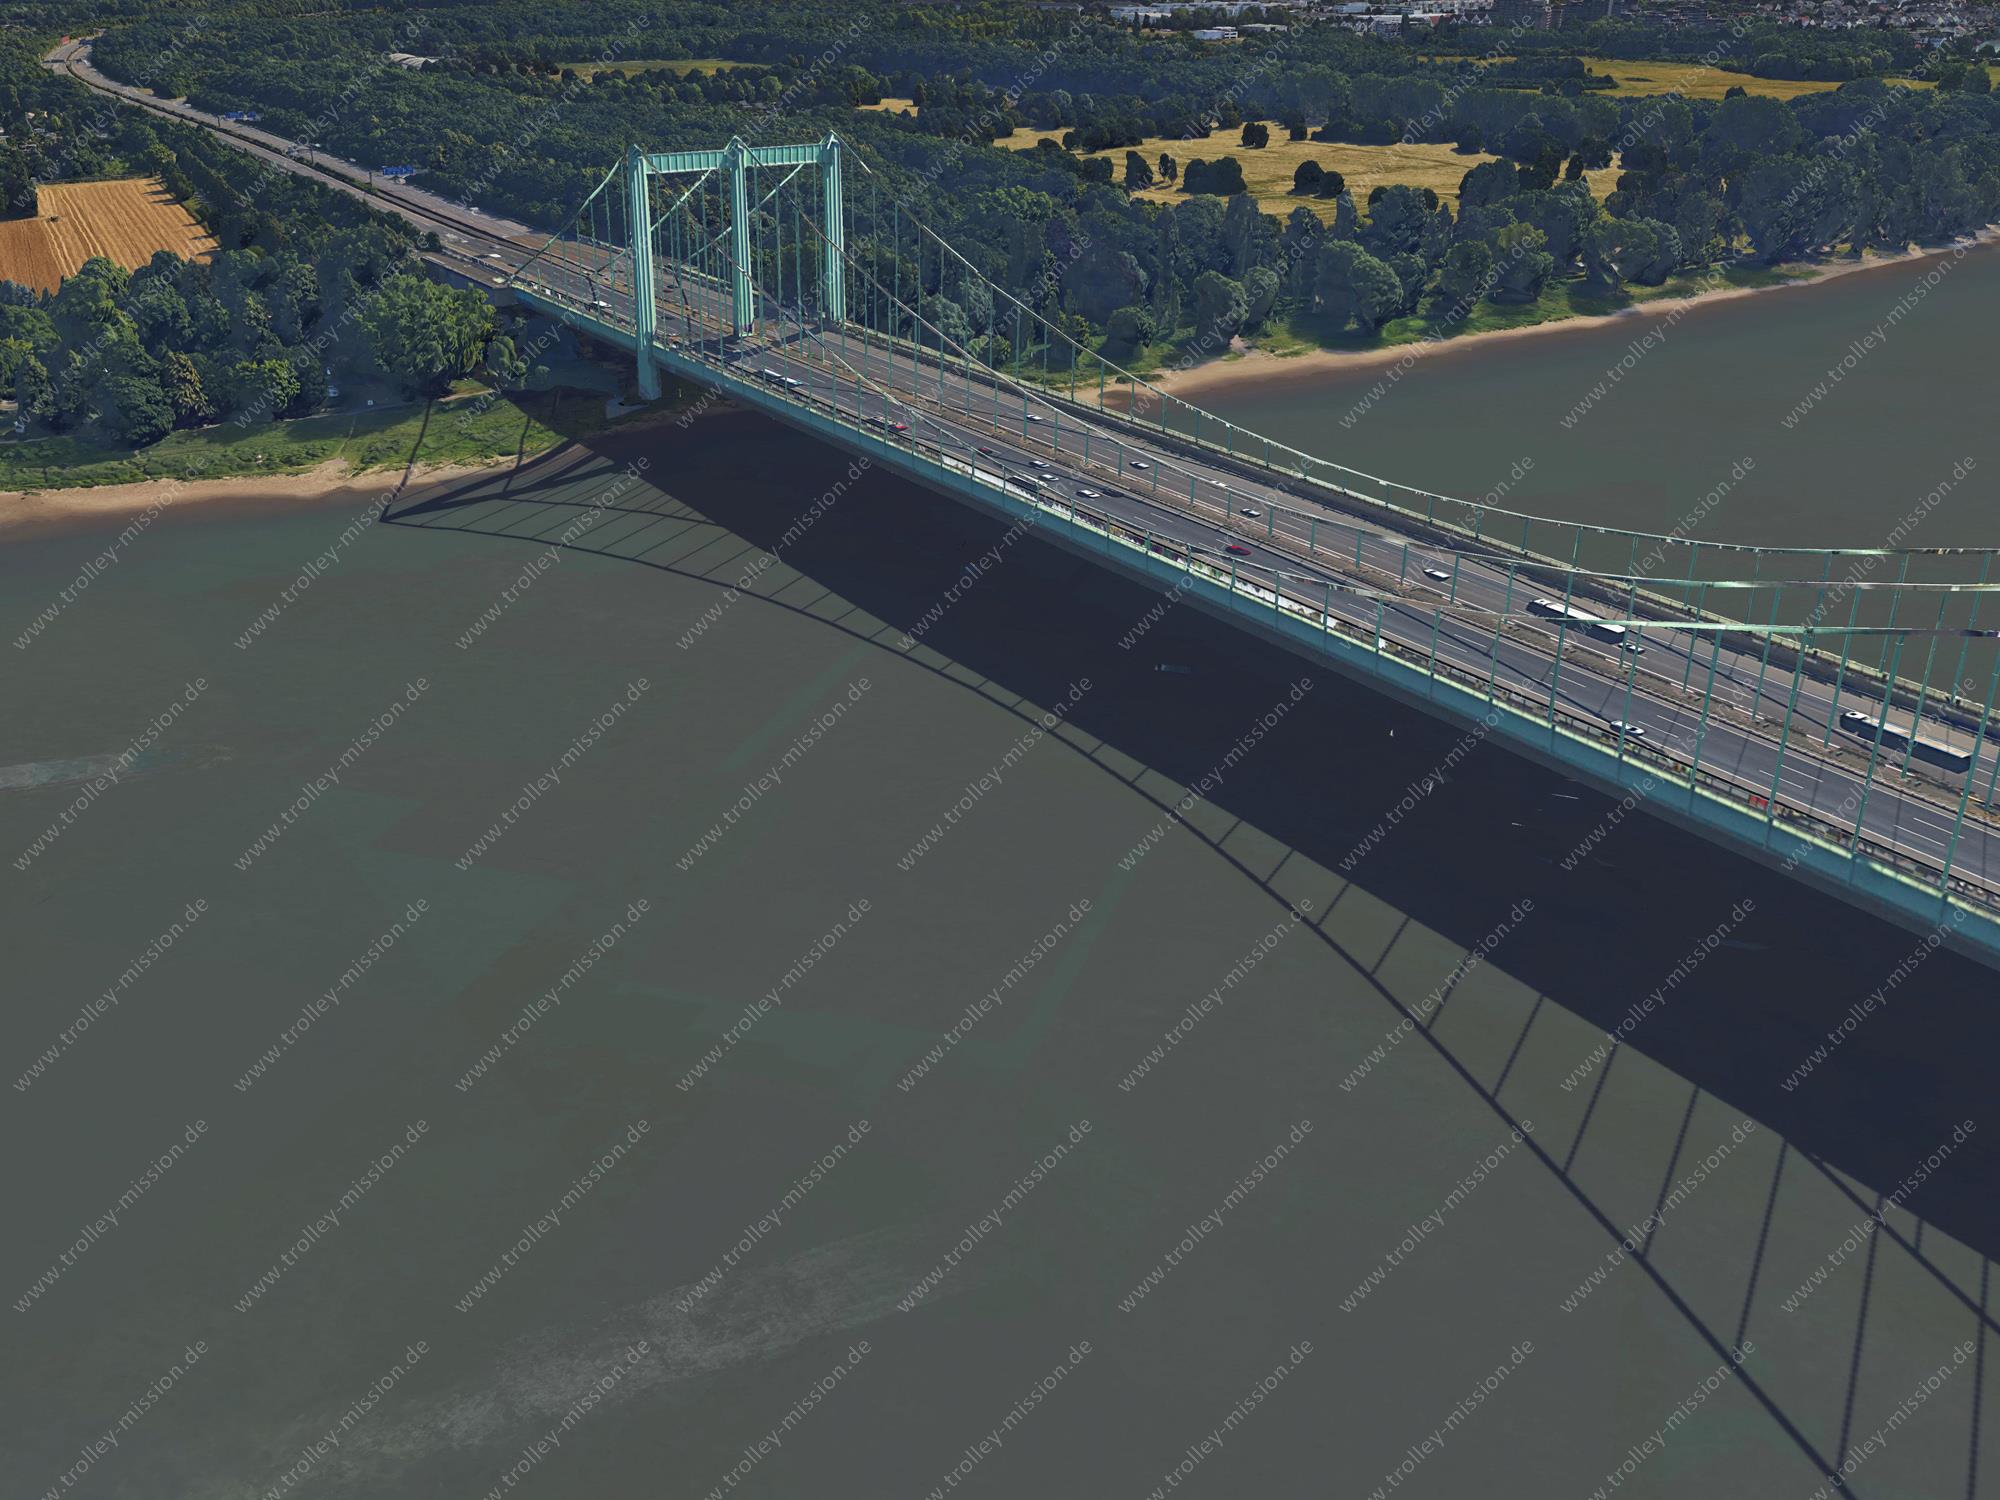 Autobahnbrücke in Köln-Rodenkirchen - Google Earth 2015